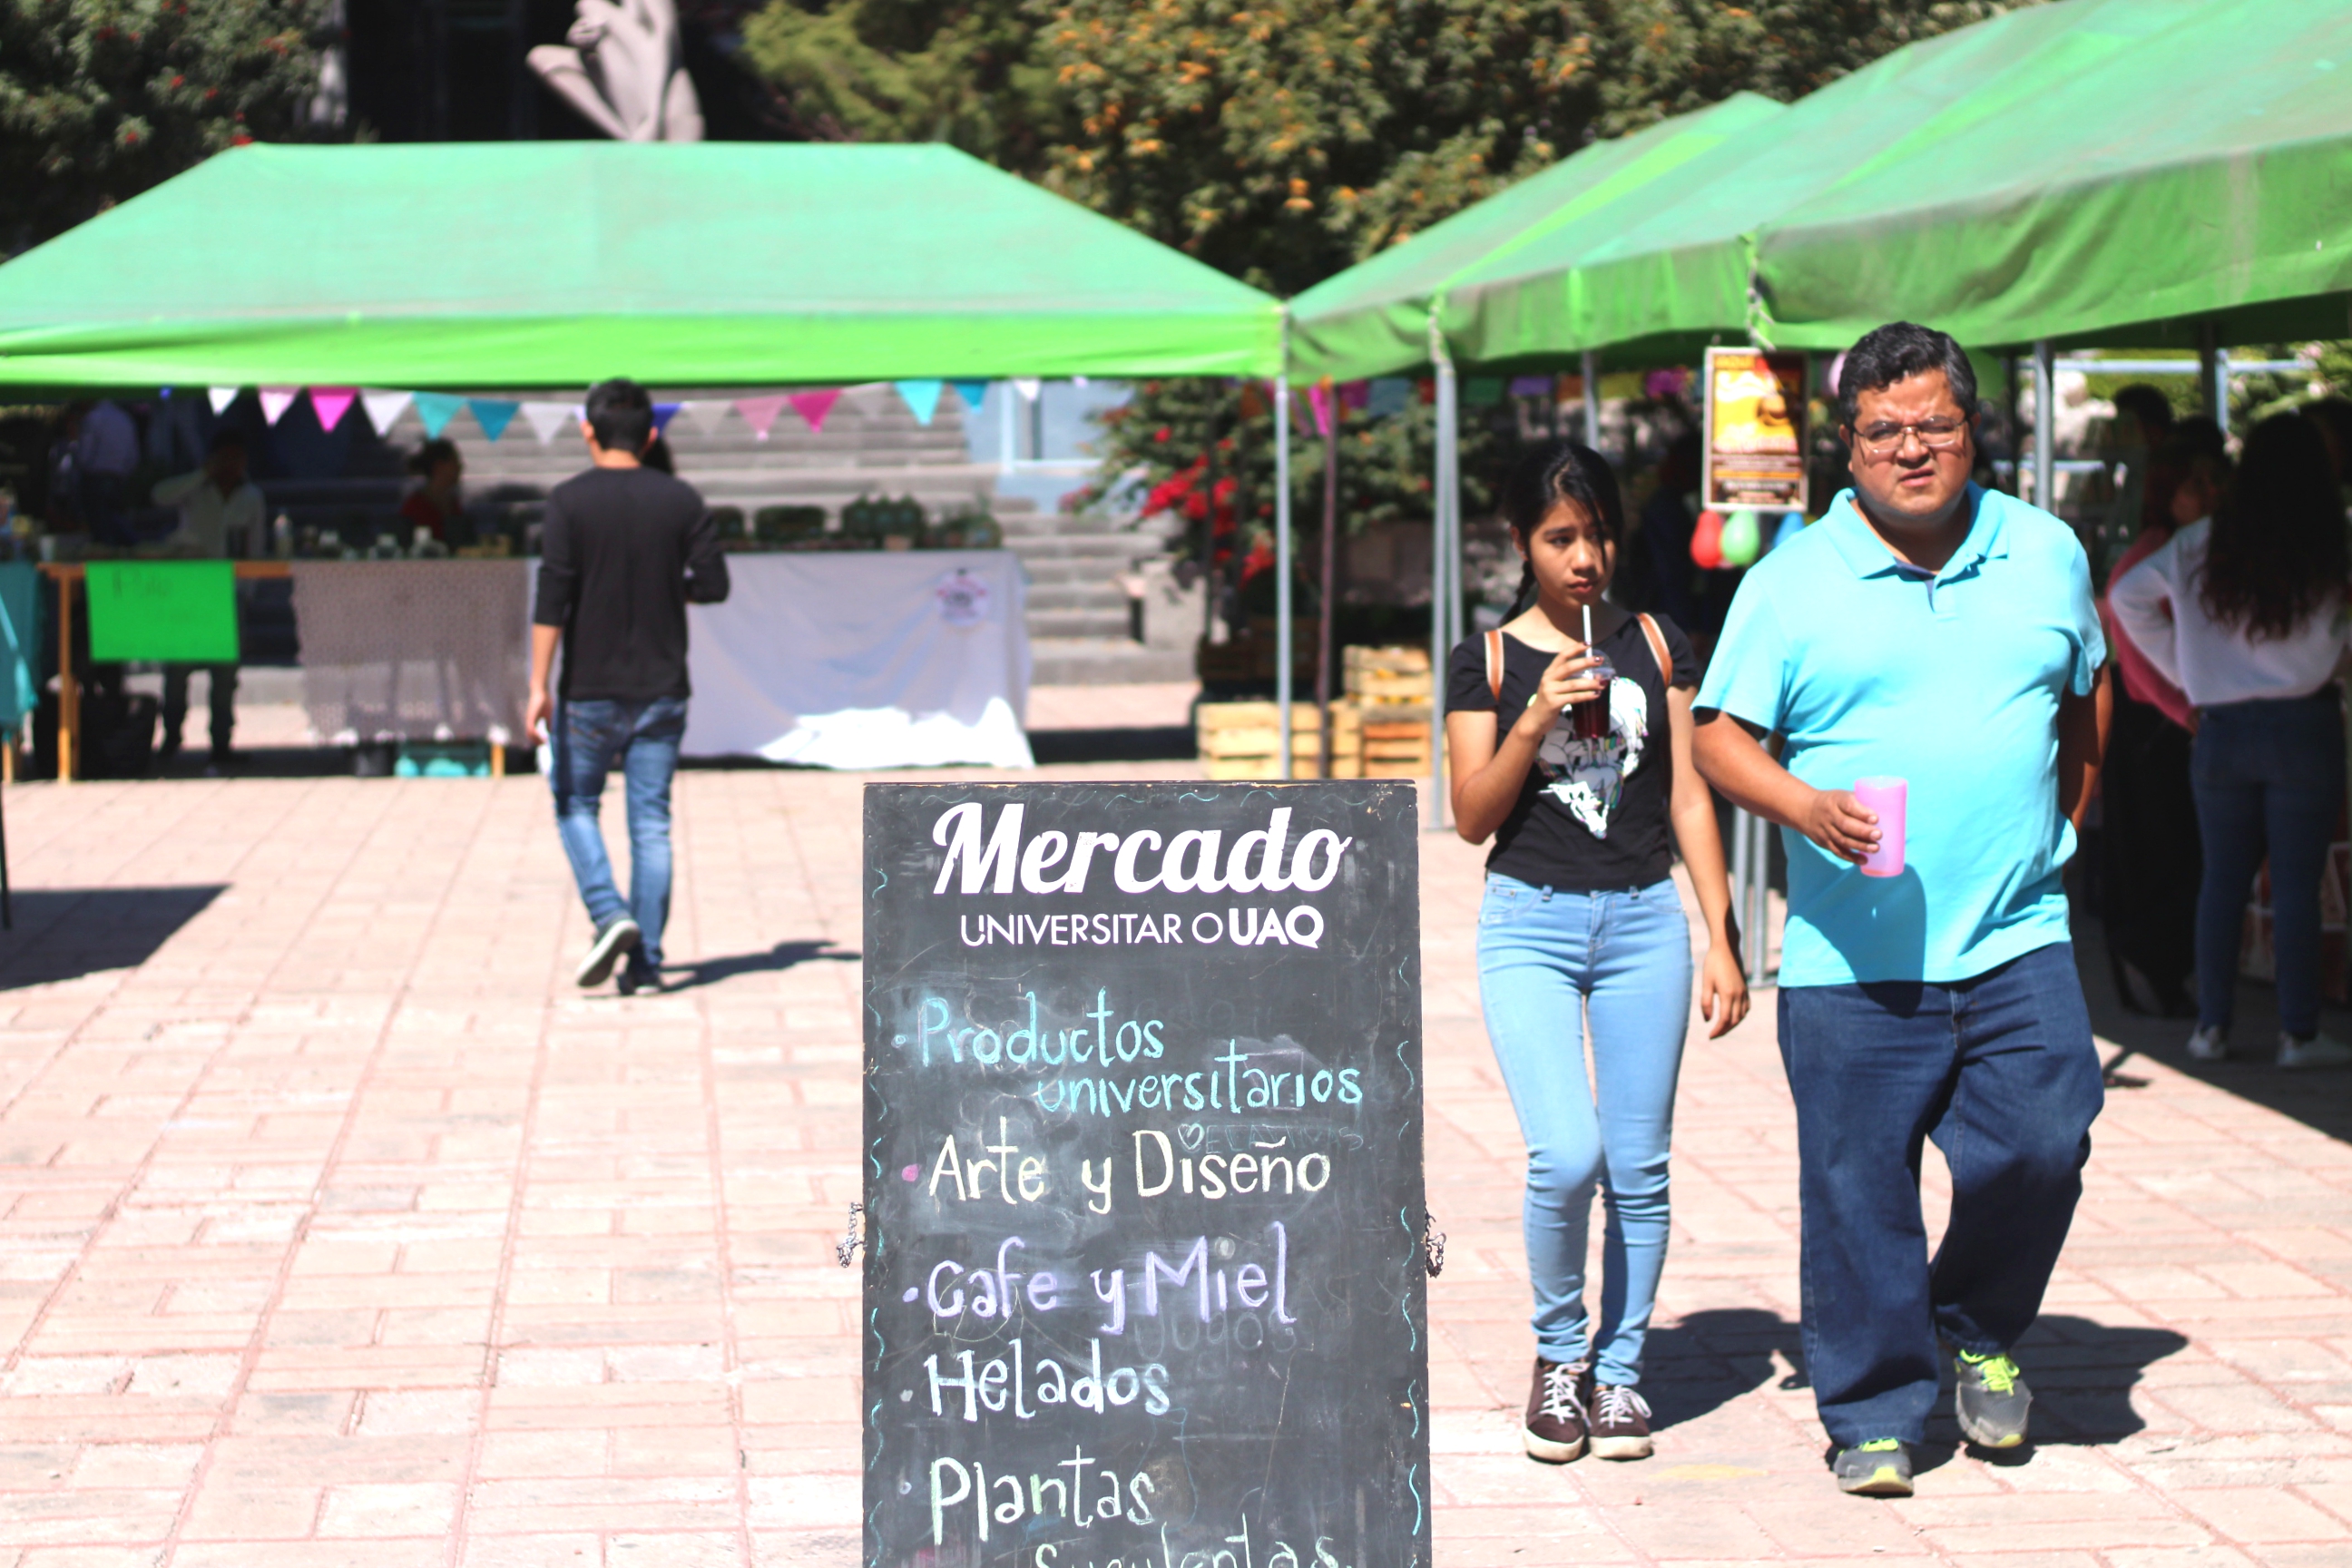  Celebra “Mercado Universitario” UAQ su 4A? aniversario